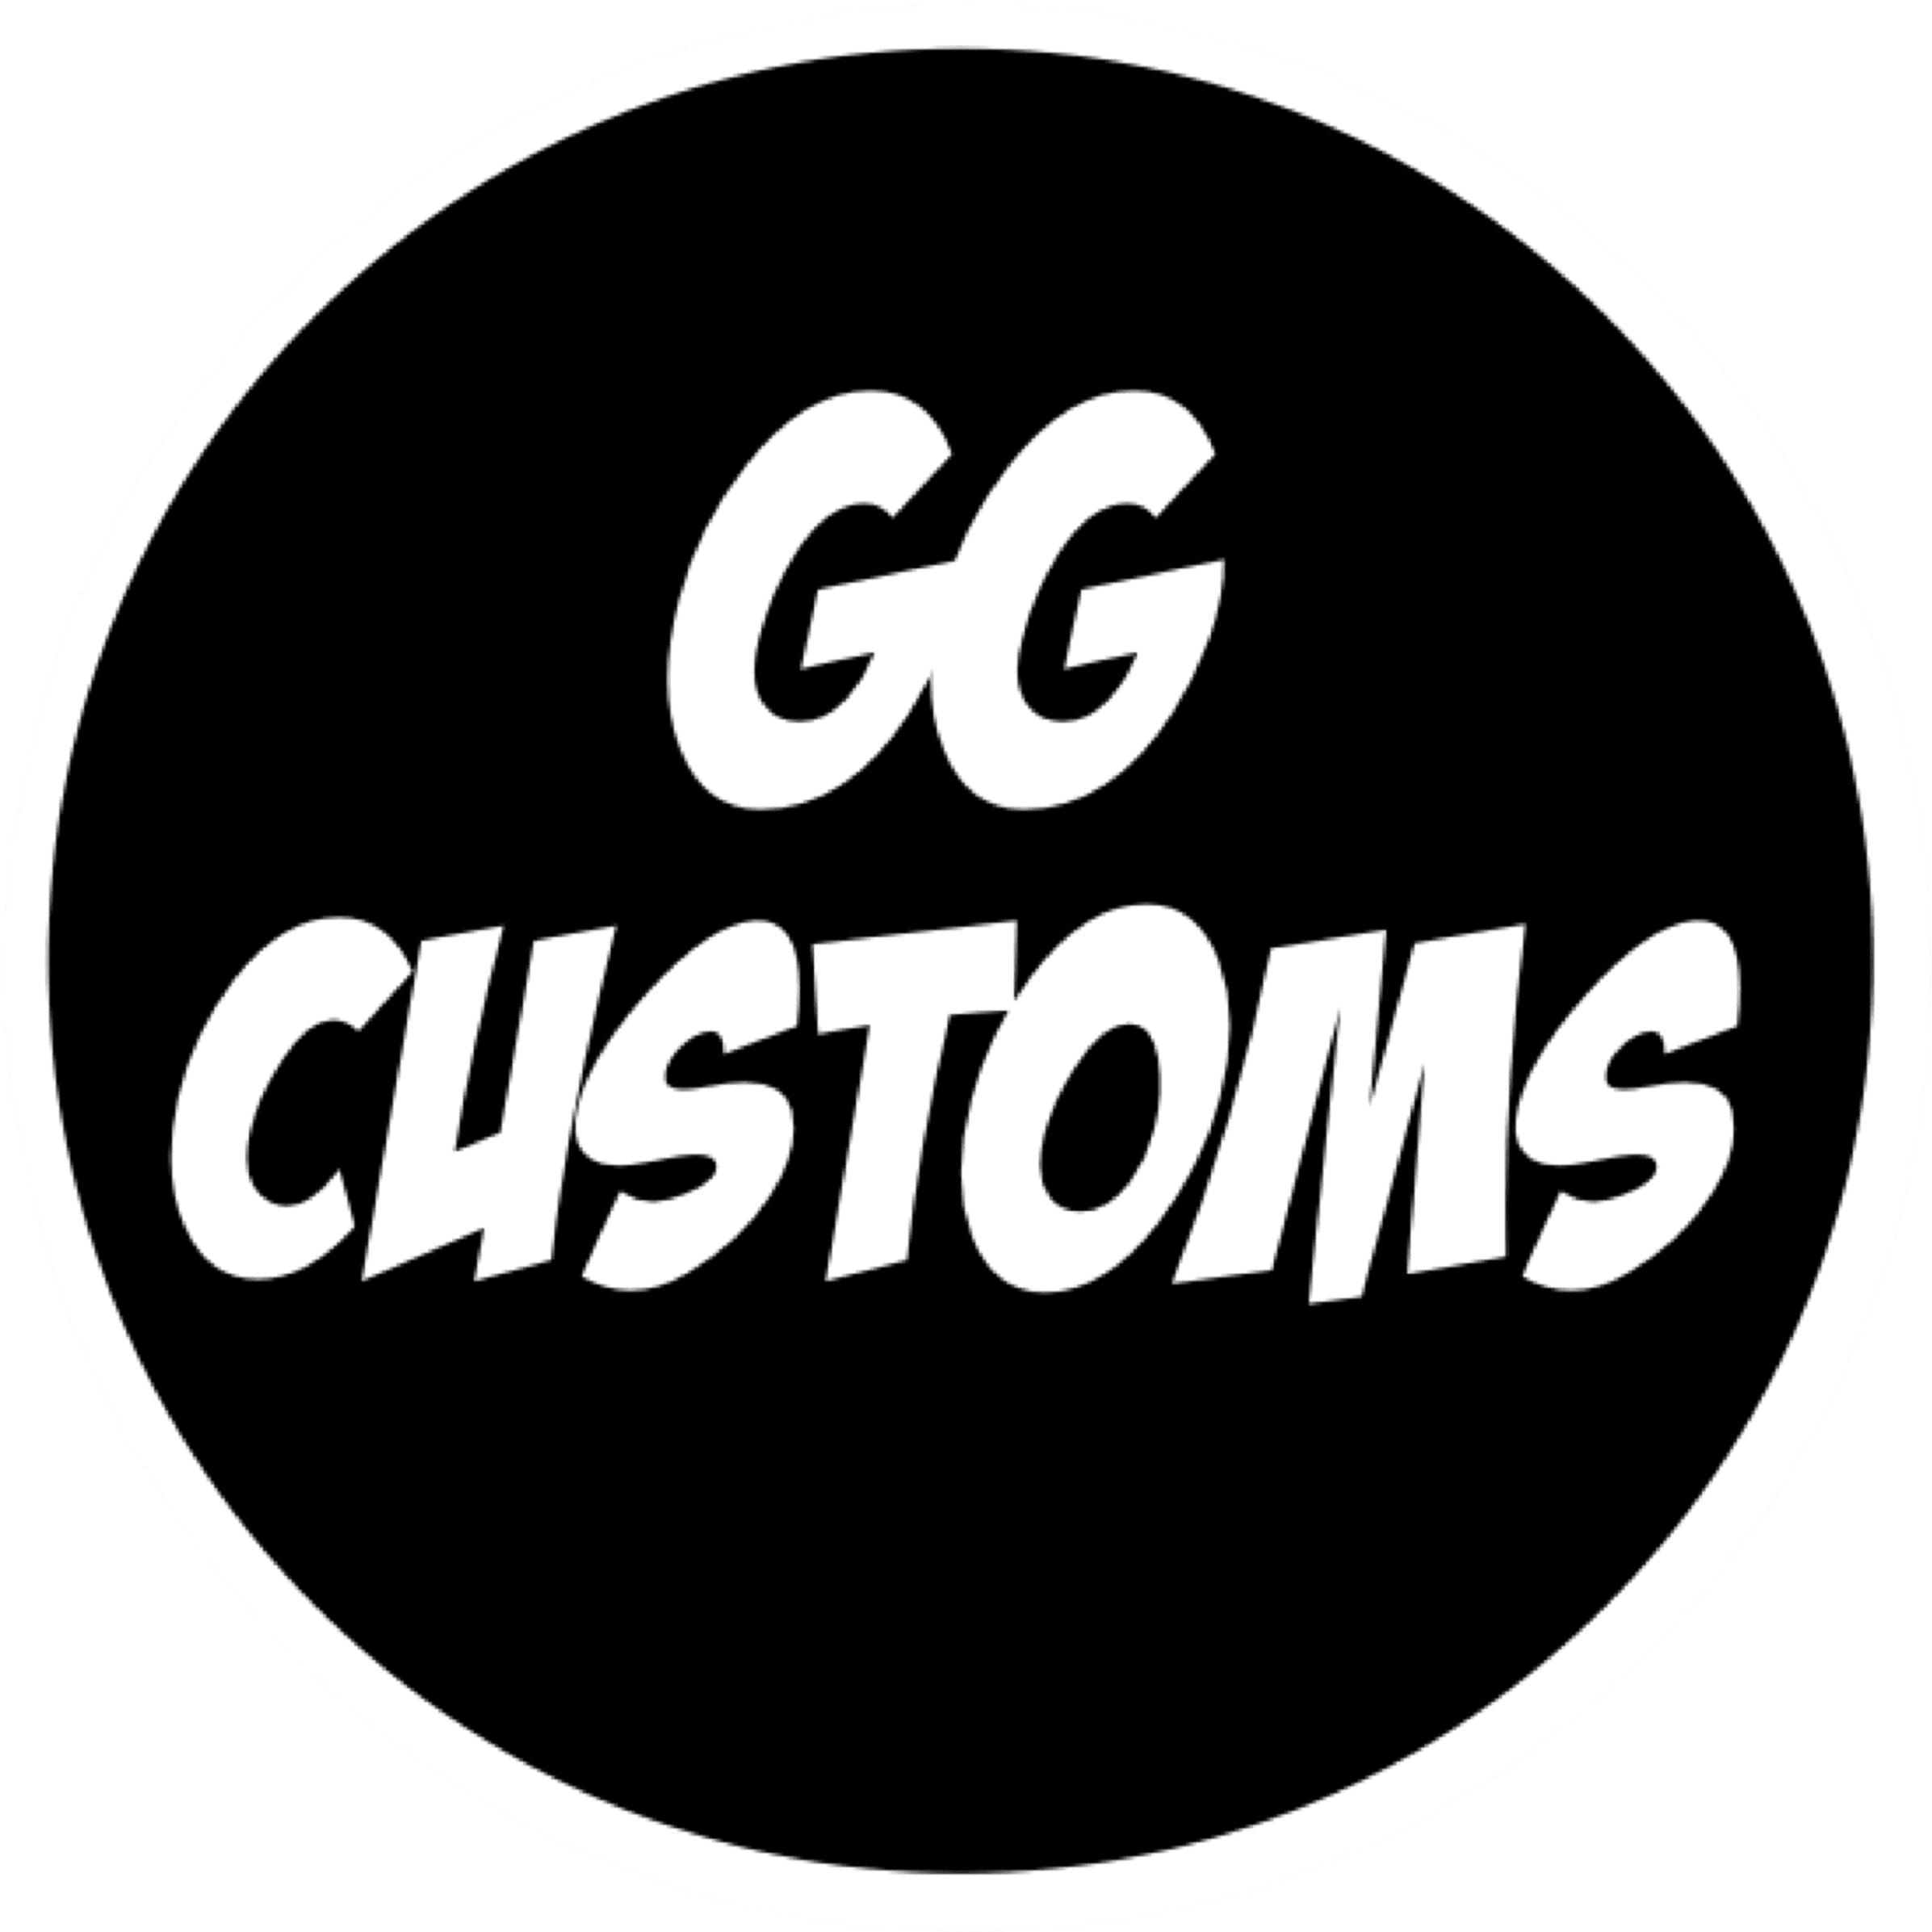 gg customs